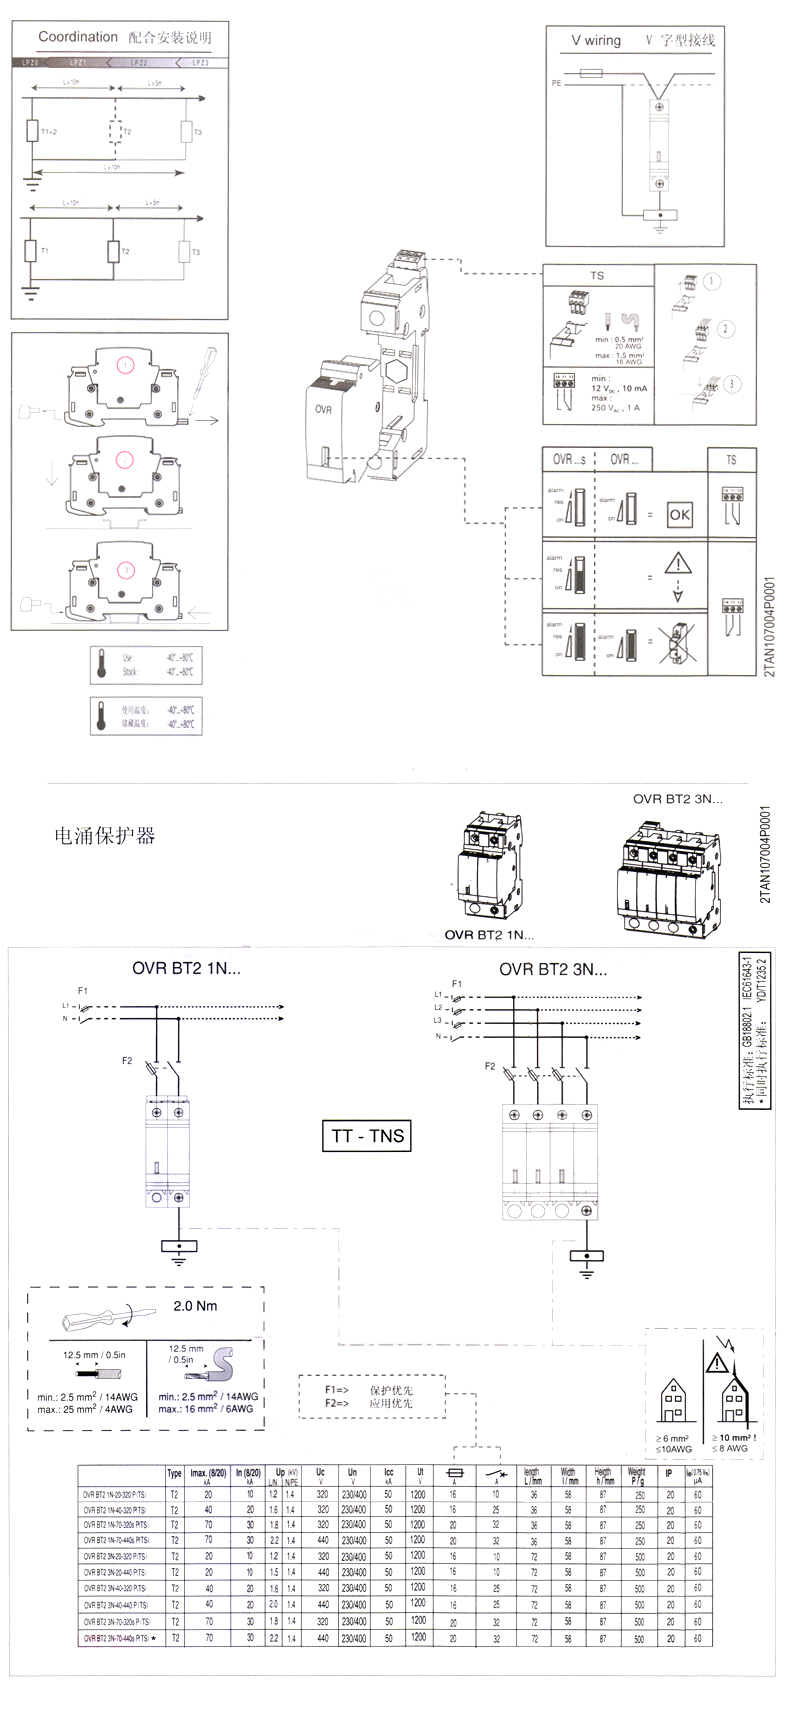 ABB接触器AF580-30-11(原装现货) AF580-30-11,ABB接触器,具备各种电压